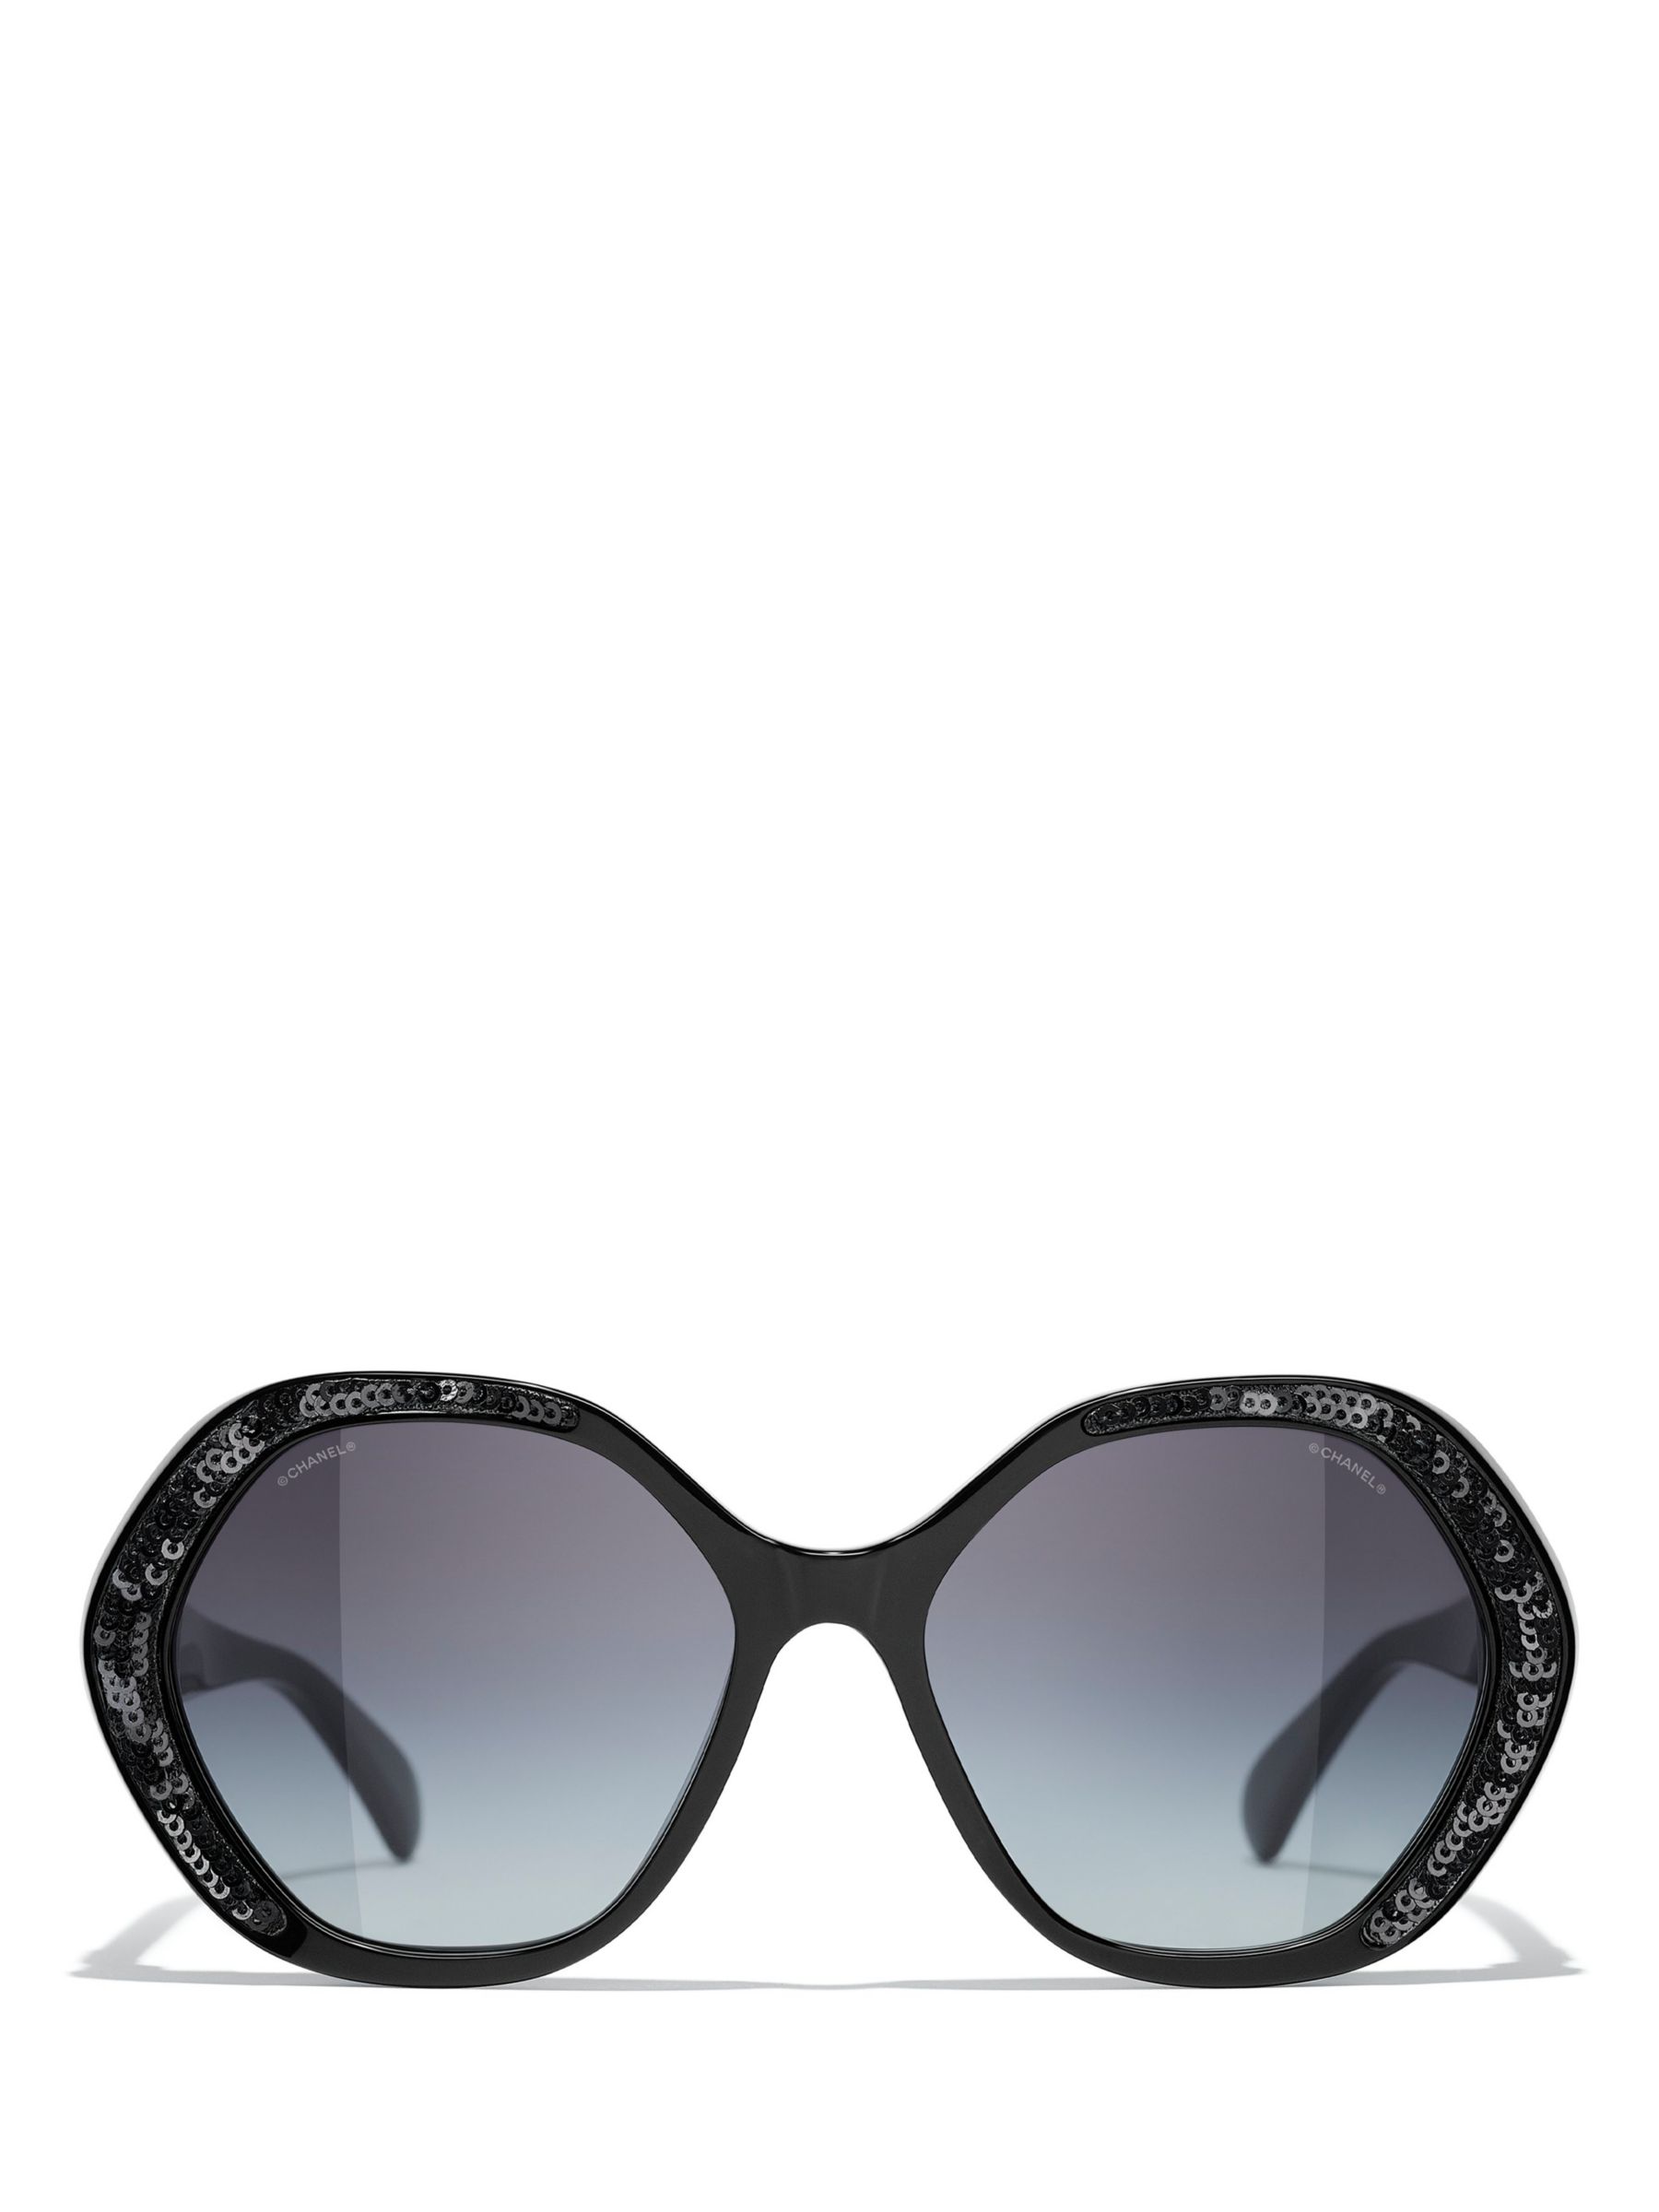 CHANEL Irregular Sunglasses CH5451 Shiny Black/Grey Gradient at